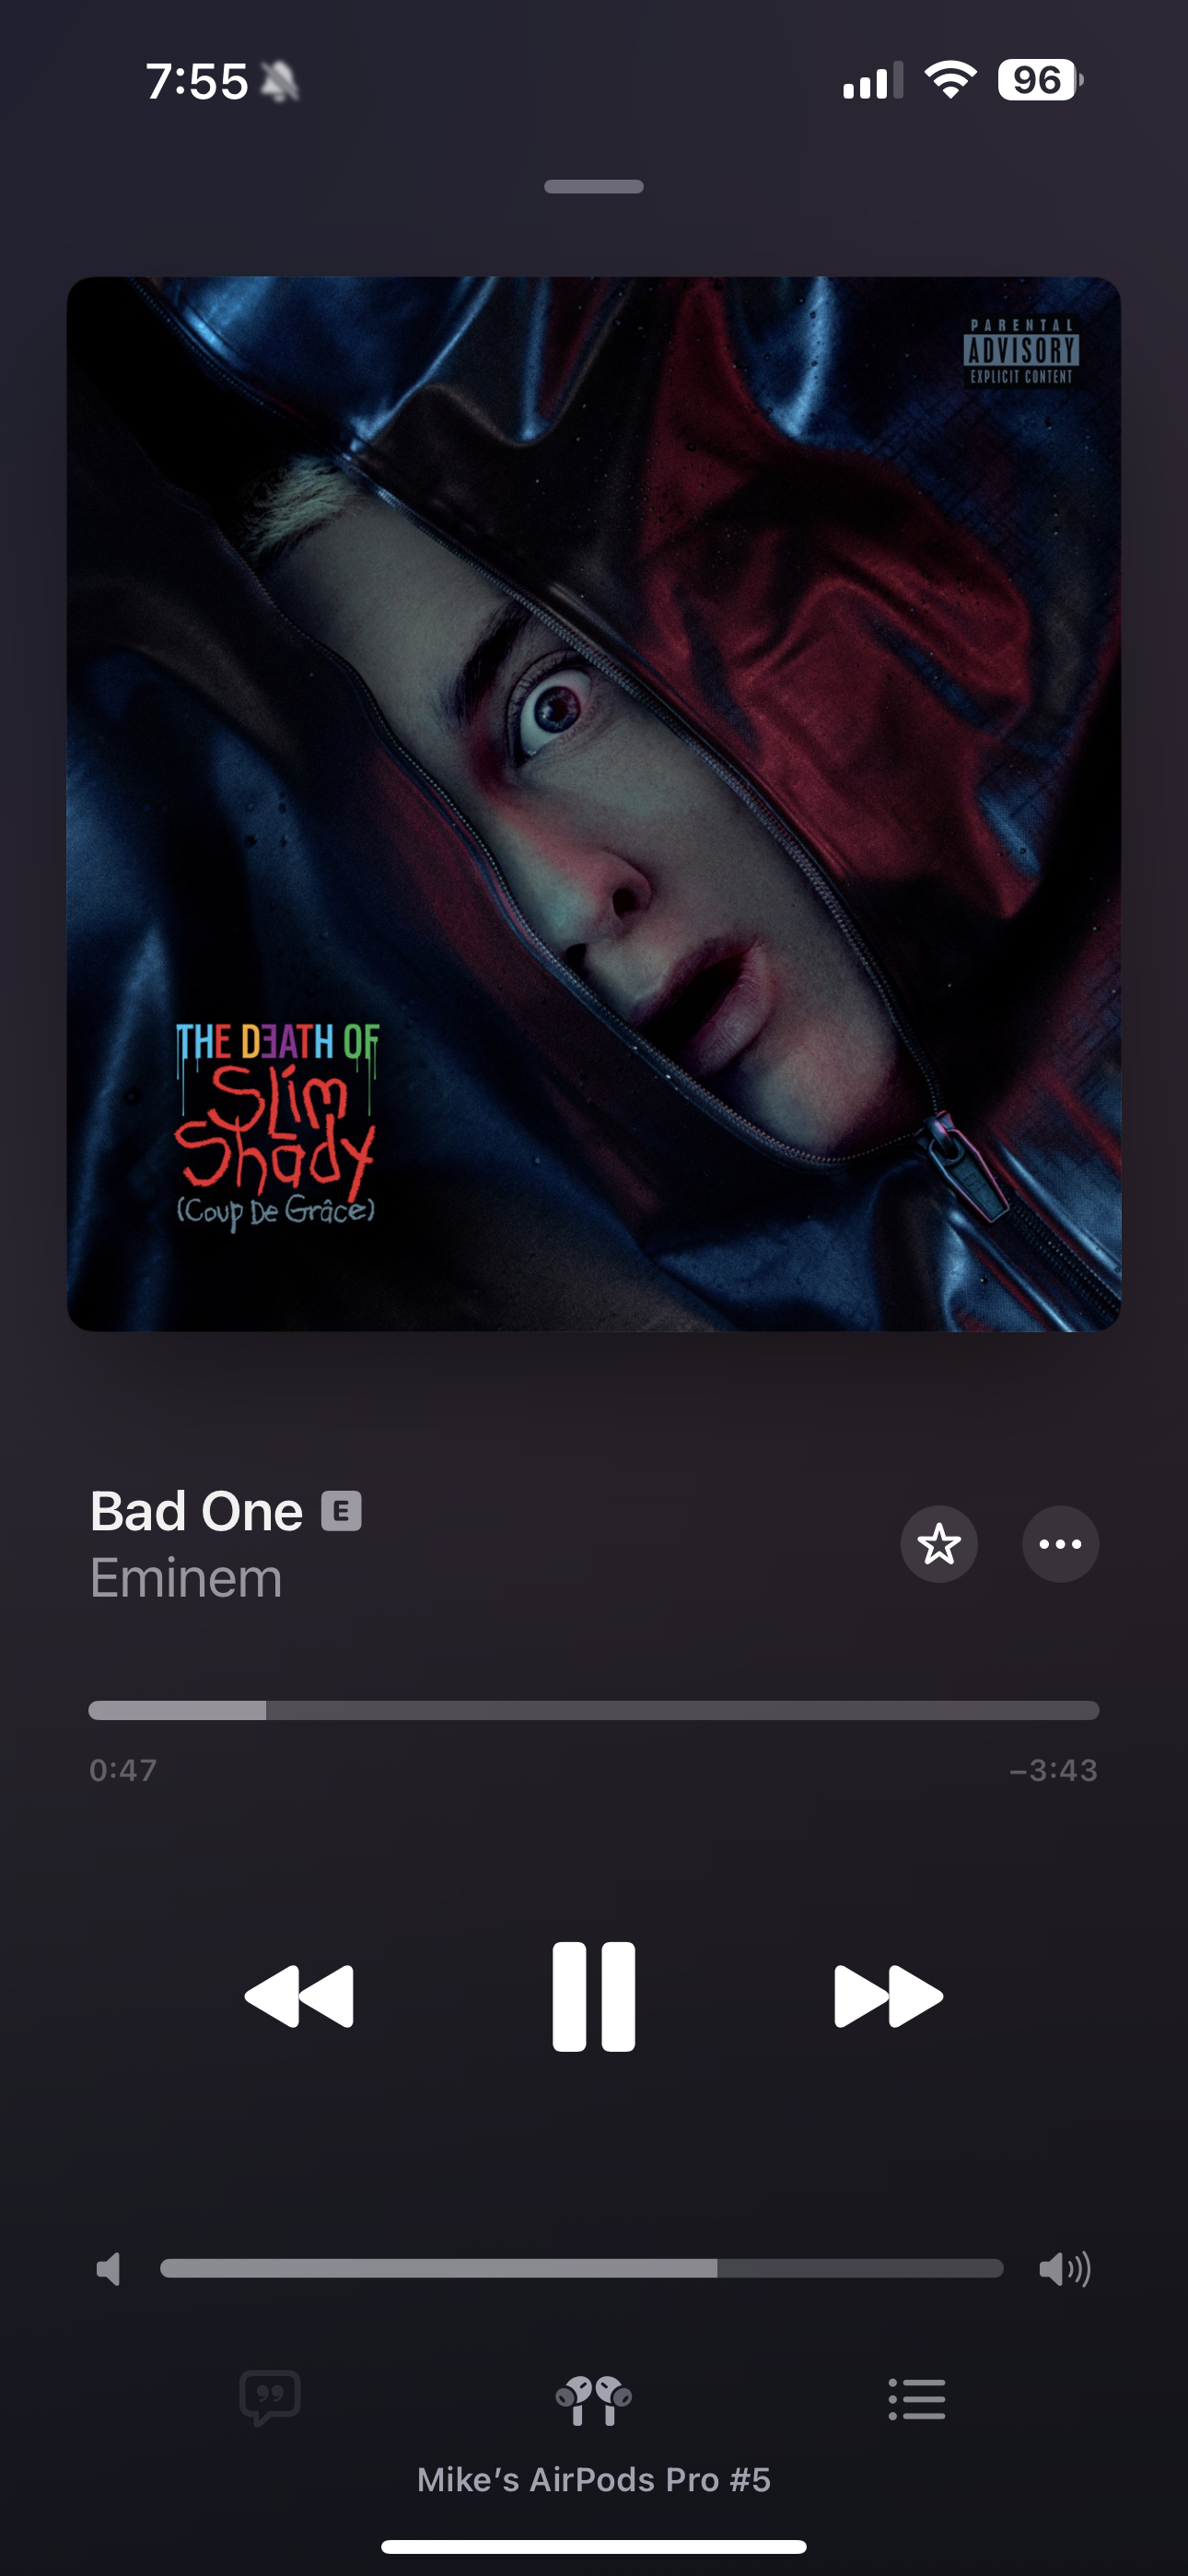 Eminem - the death of slim shady album. 